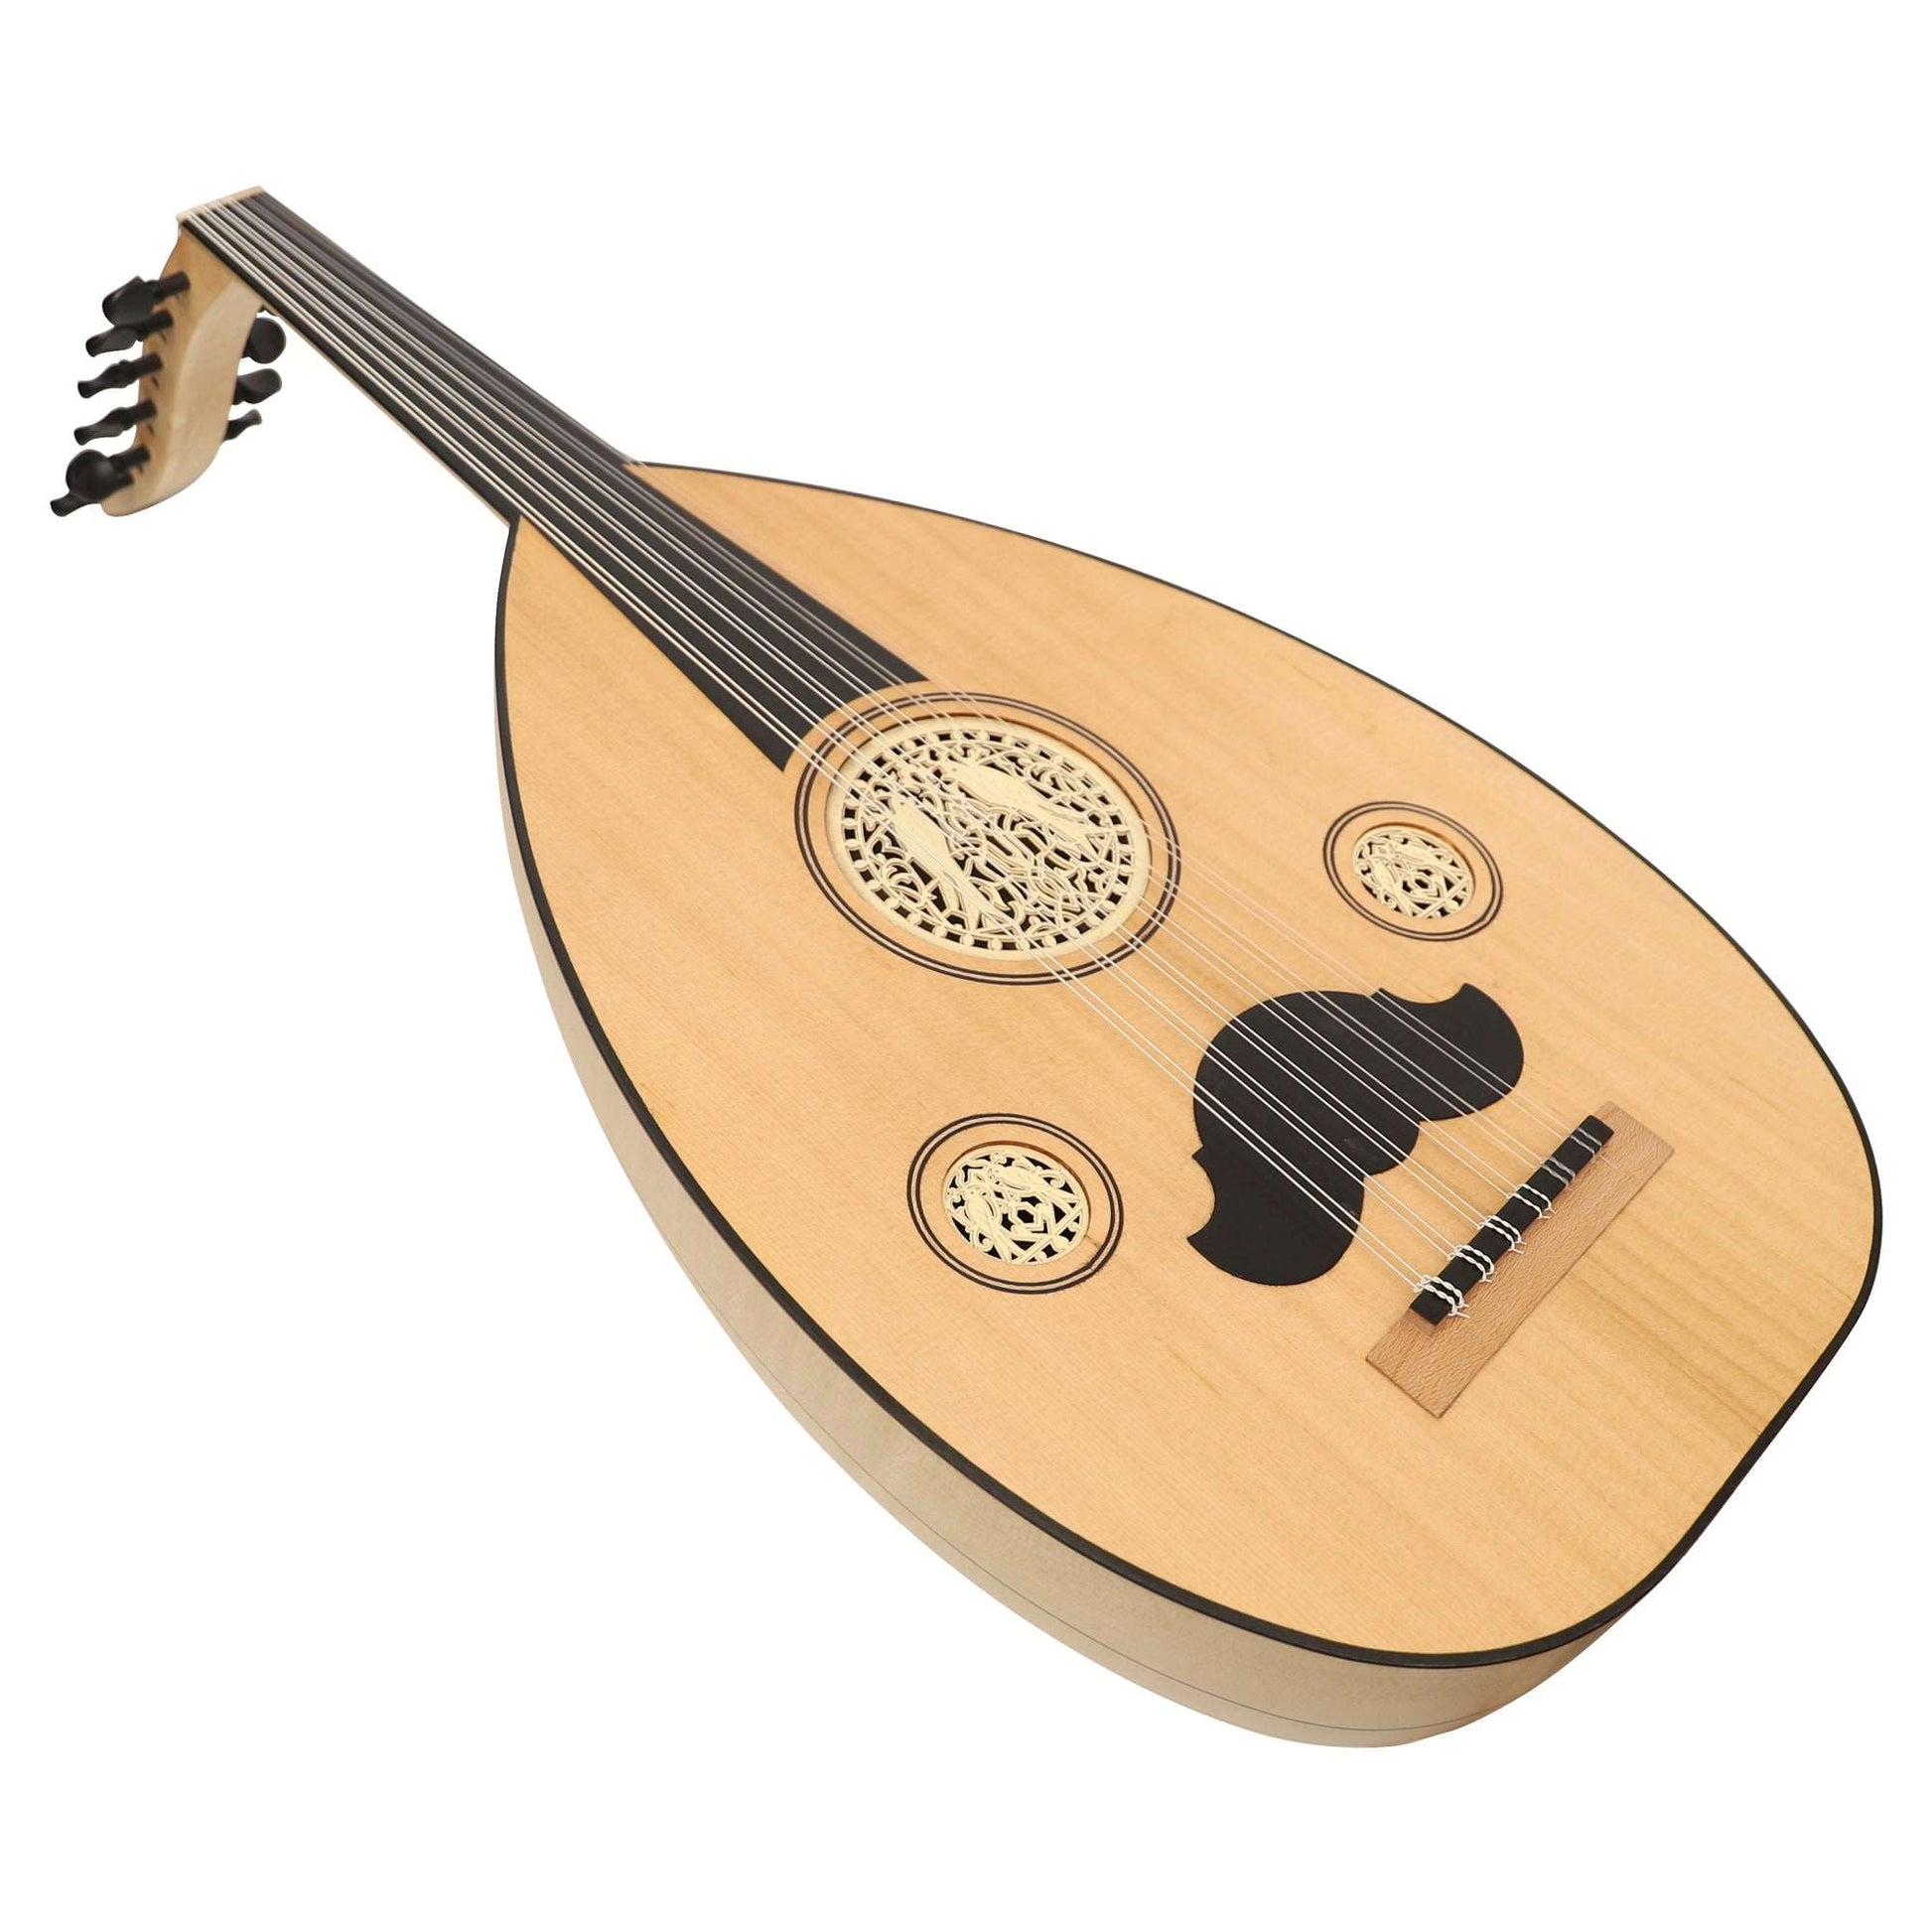 Heartland Arabic Oud, 12 Strings Maple